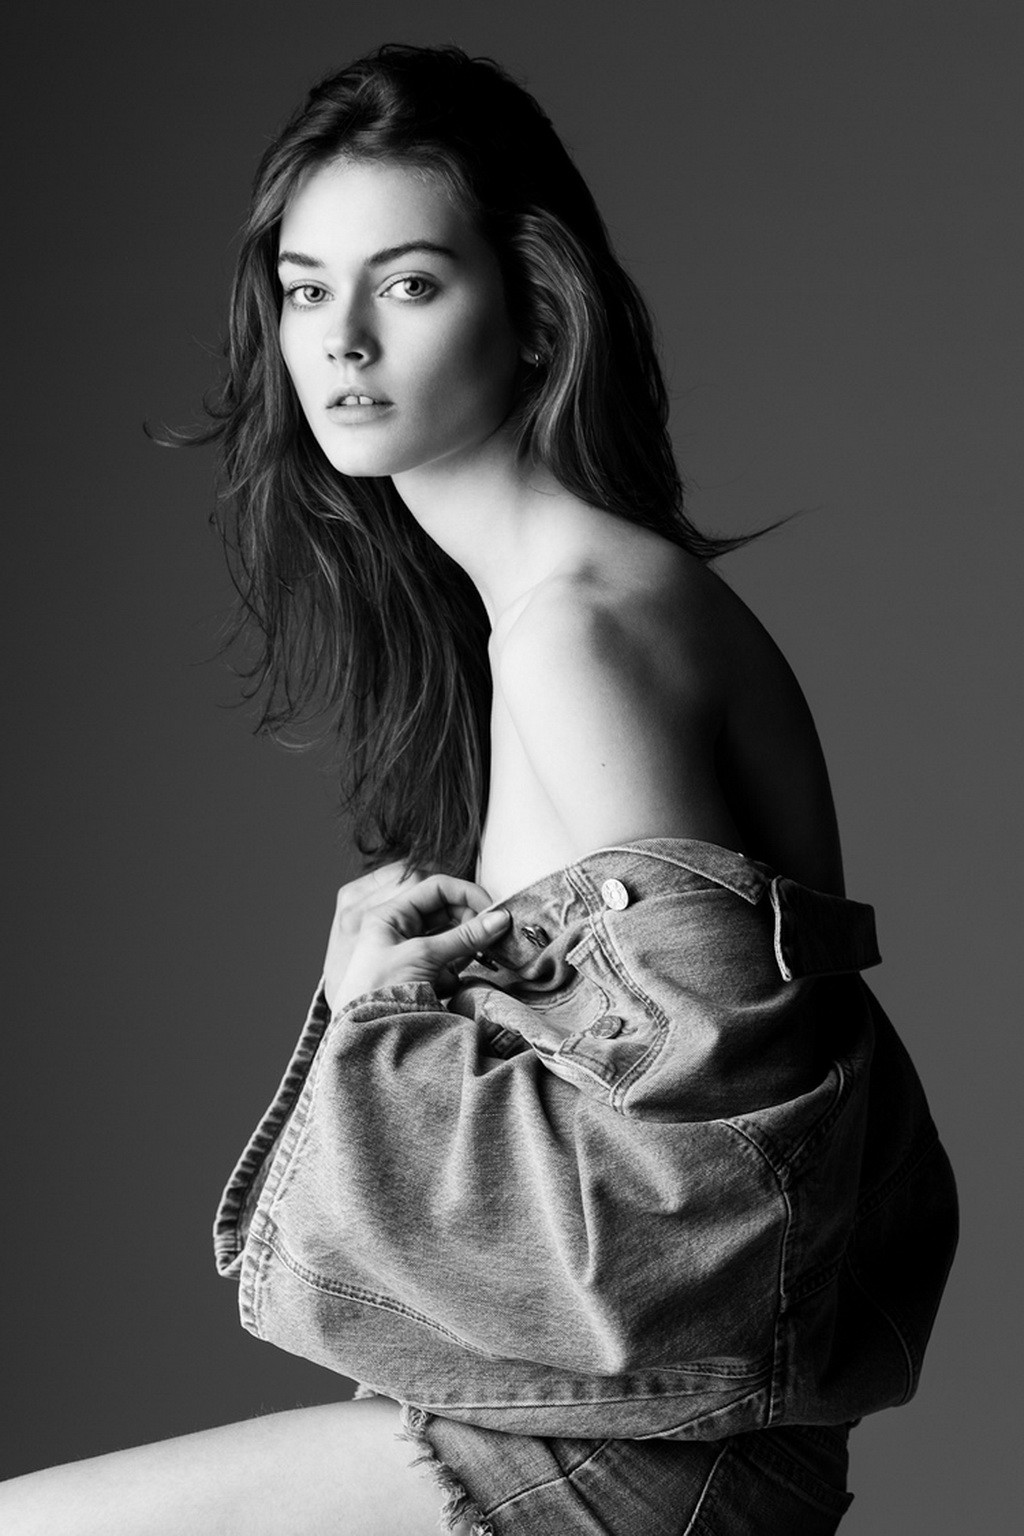 Monika jagaciak pose nue mais cache ses atouts dans le photoshoot de viva moda outtak
 #75210719